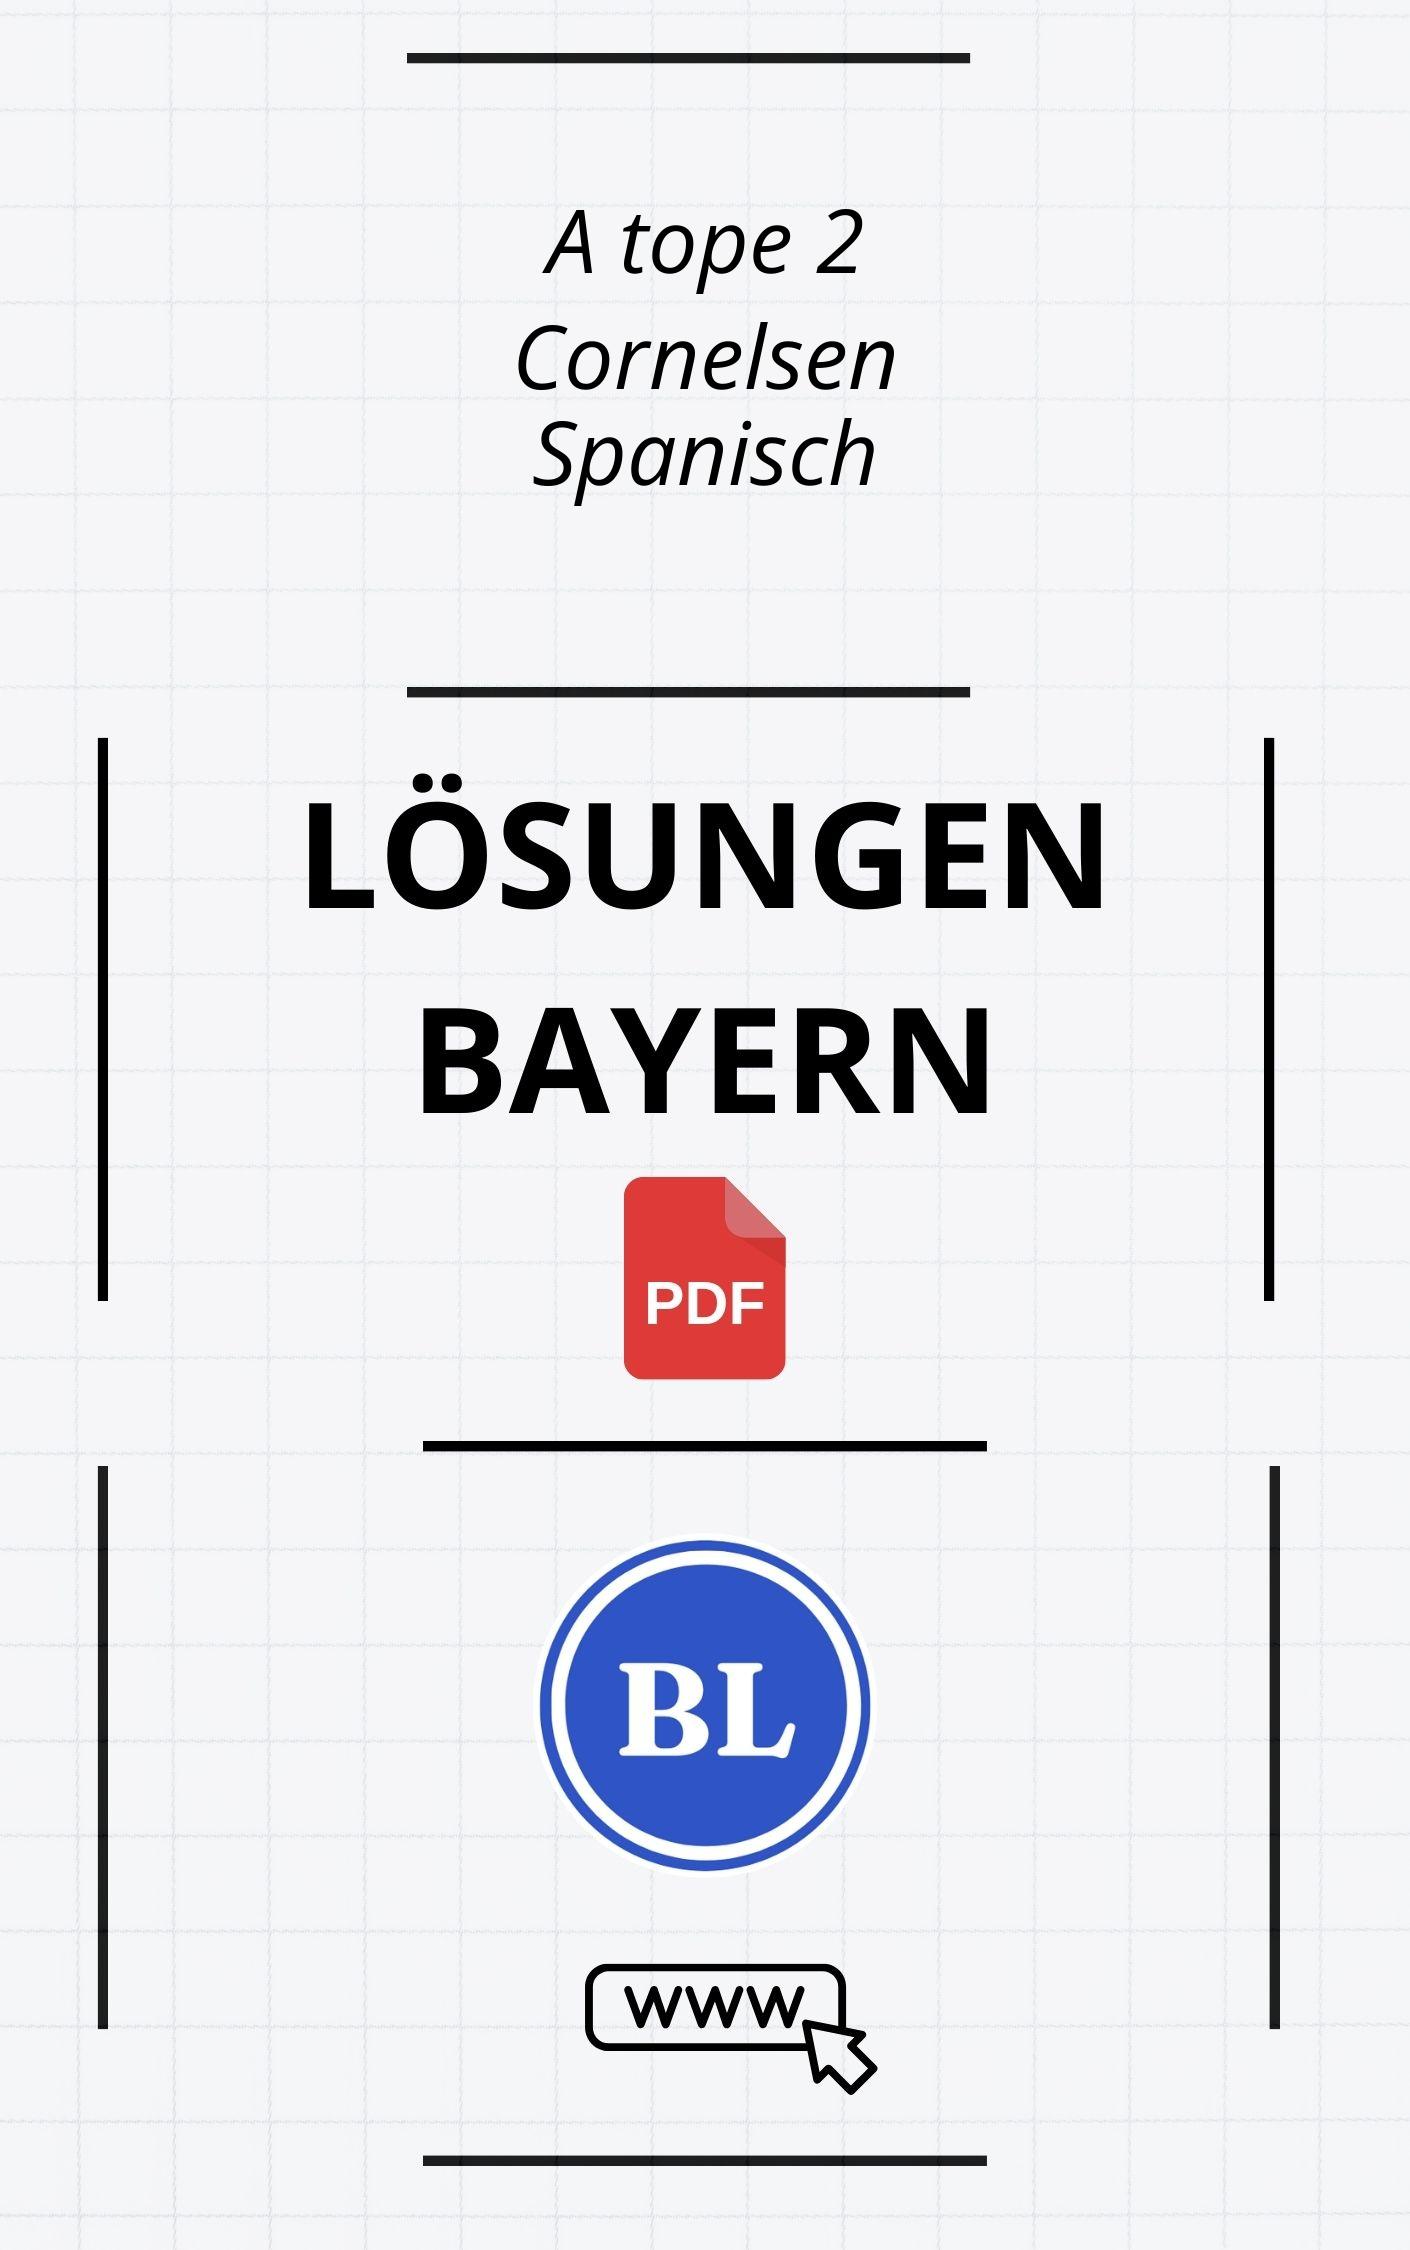 A tope 2 Lösungen Bayern